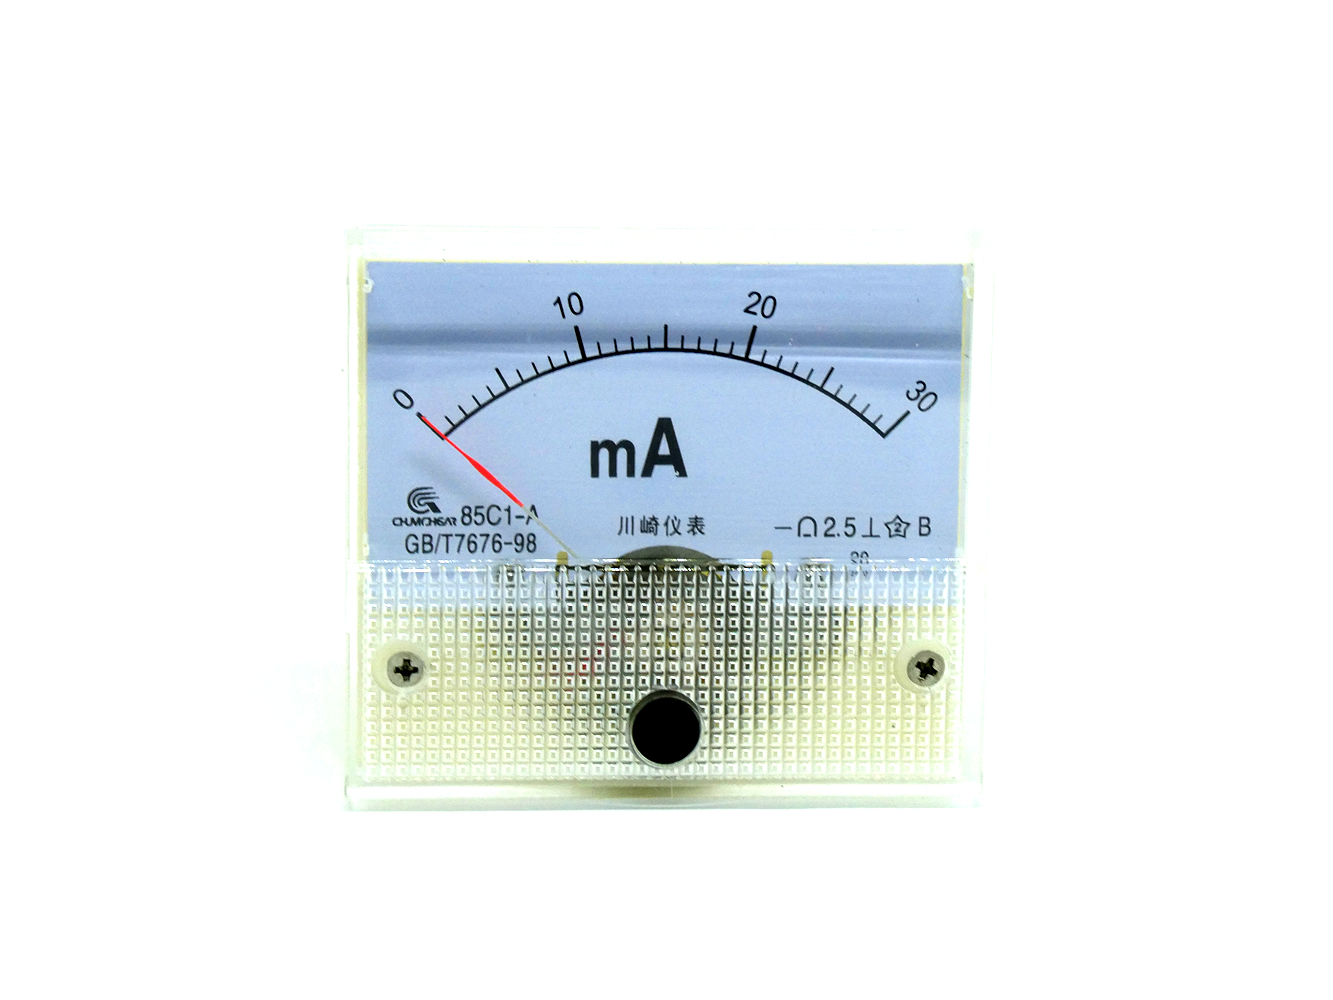 Analog Current Panel Ammeter DC 0-30mA 85C1